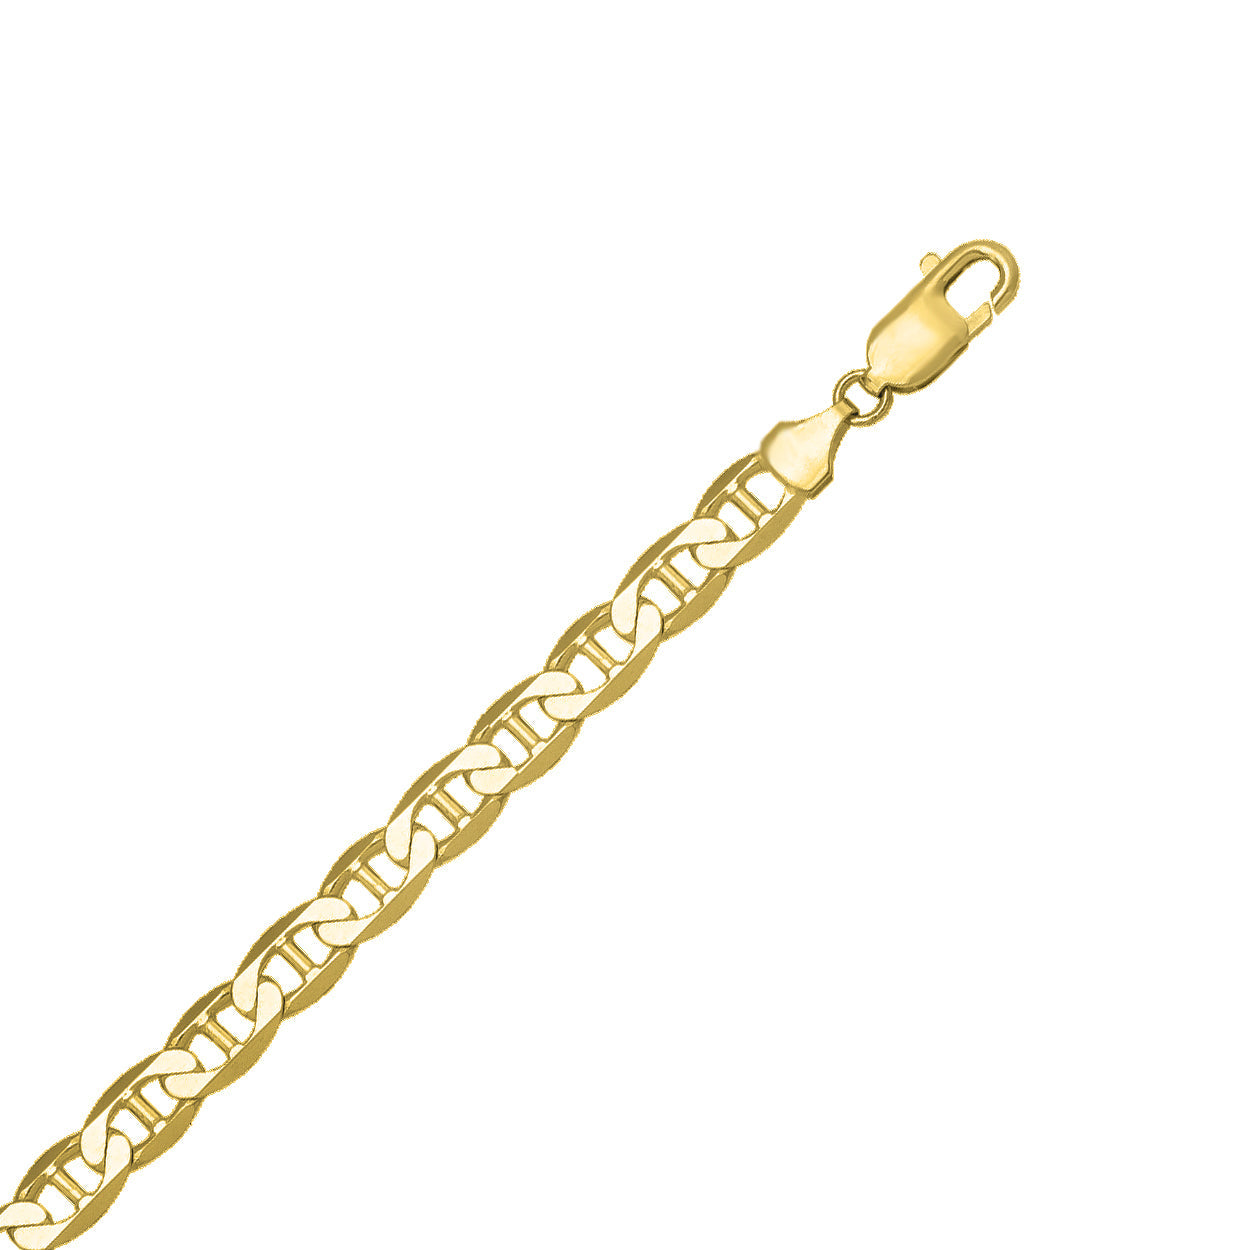 7mm Gold Marine Style Bracelet